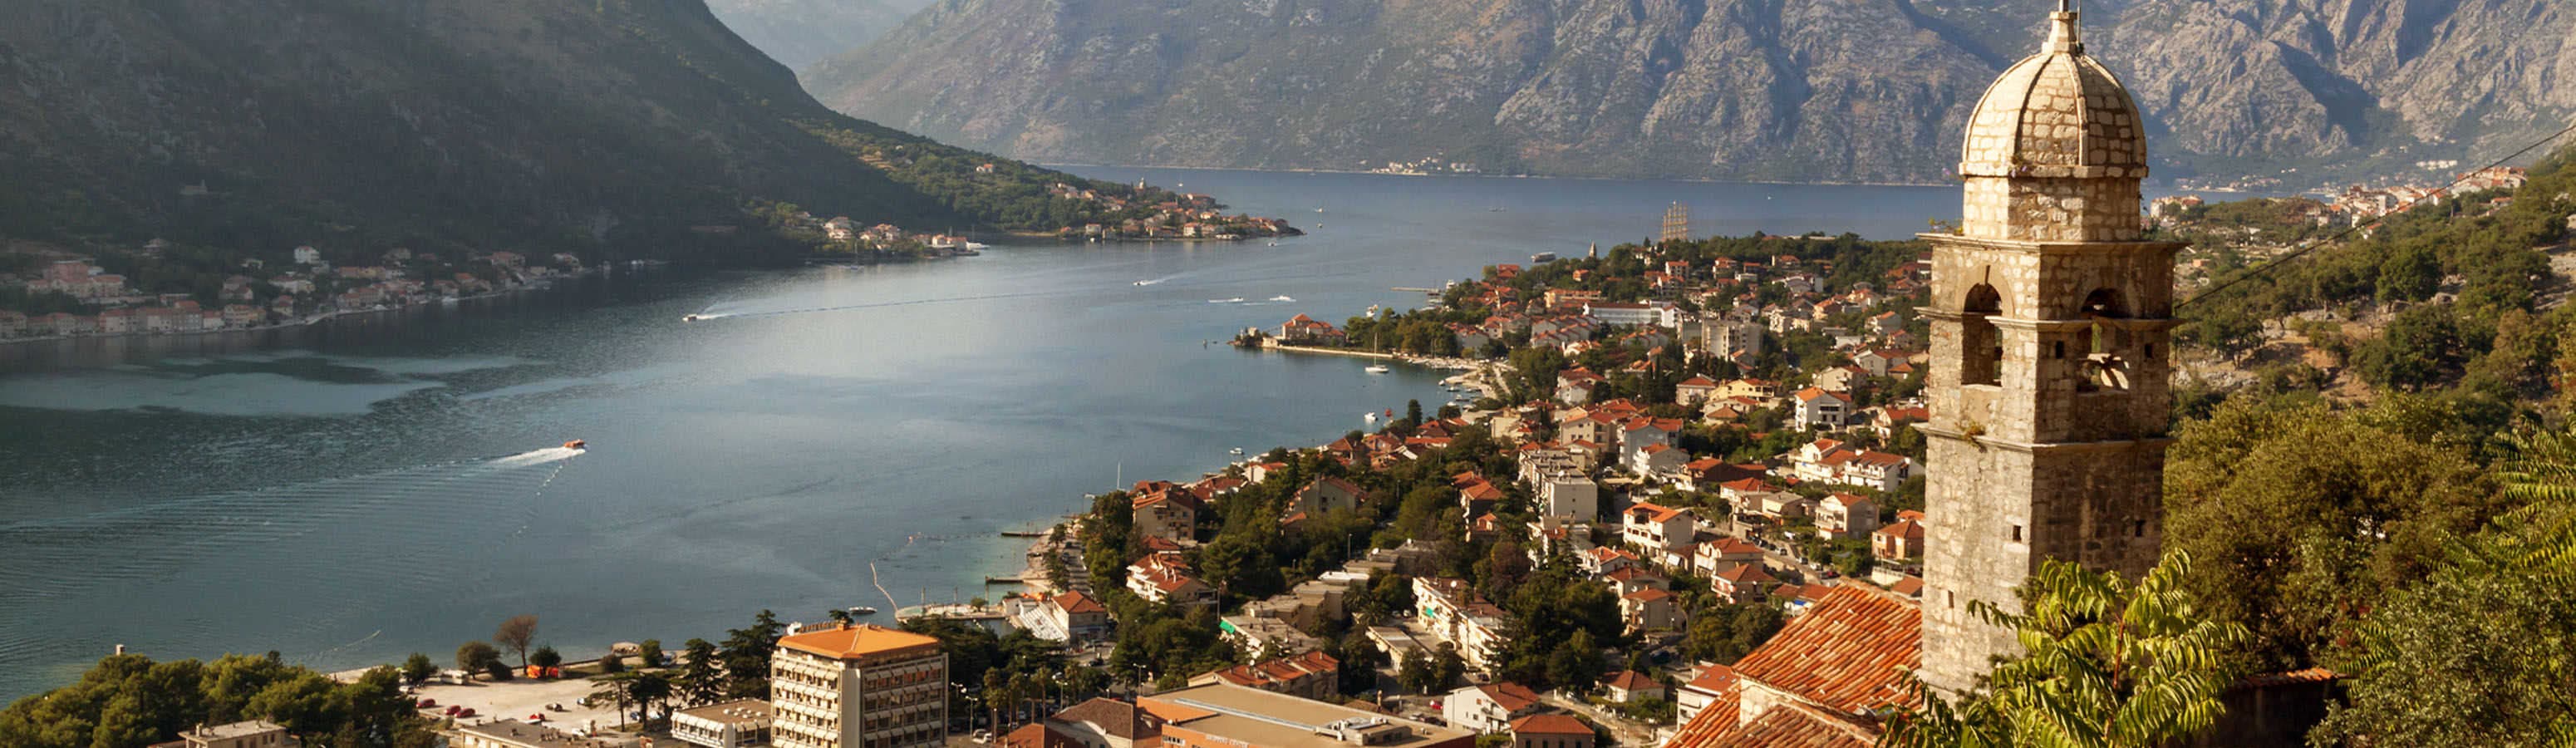 Kotor - Black Pearl of the Adriatic